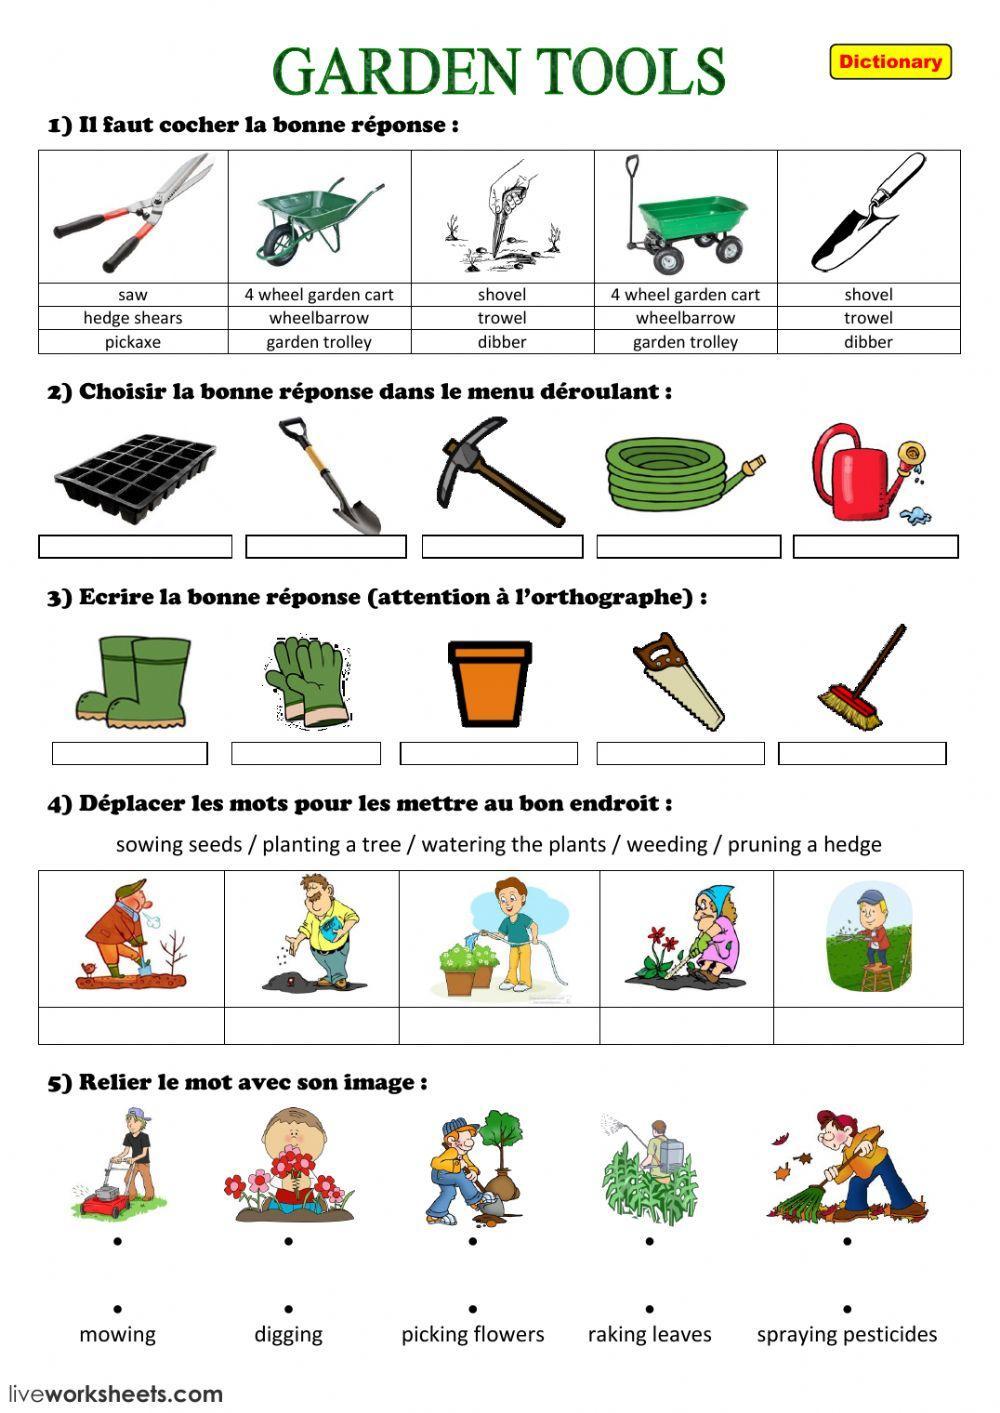 Gardening Tools Worksheet Live Worksheets